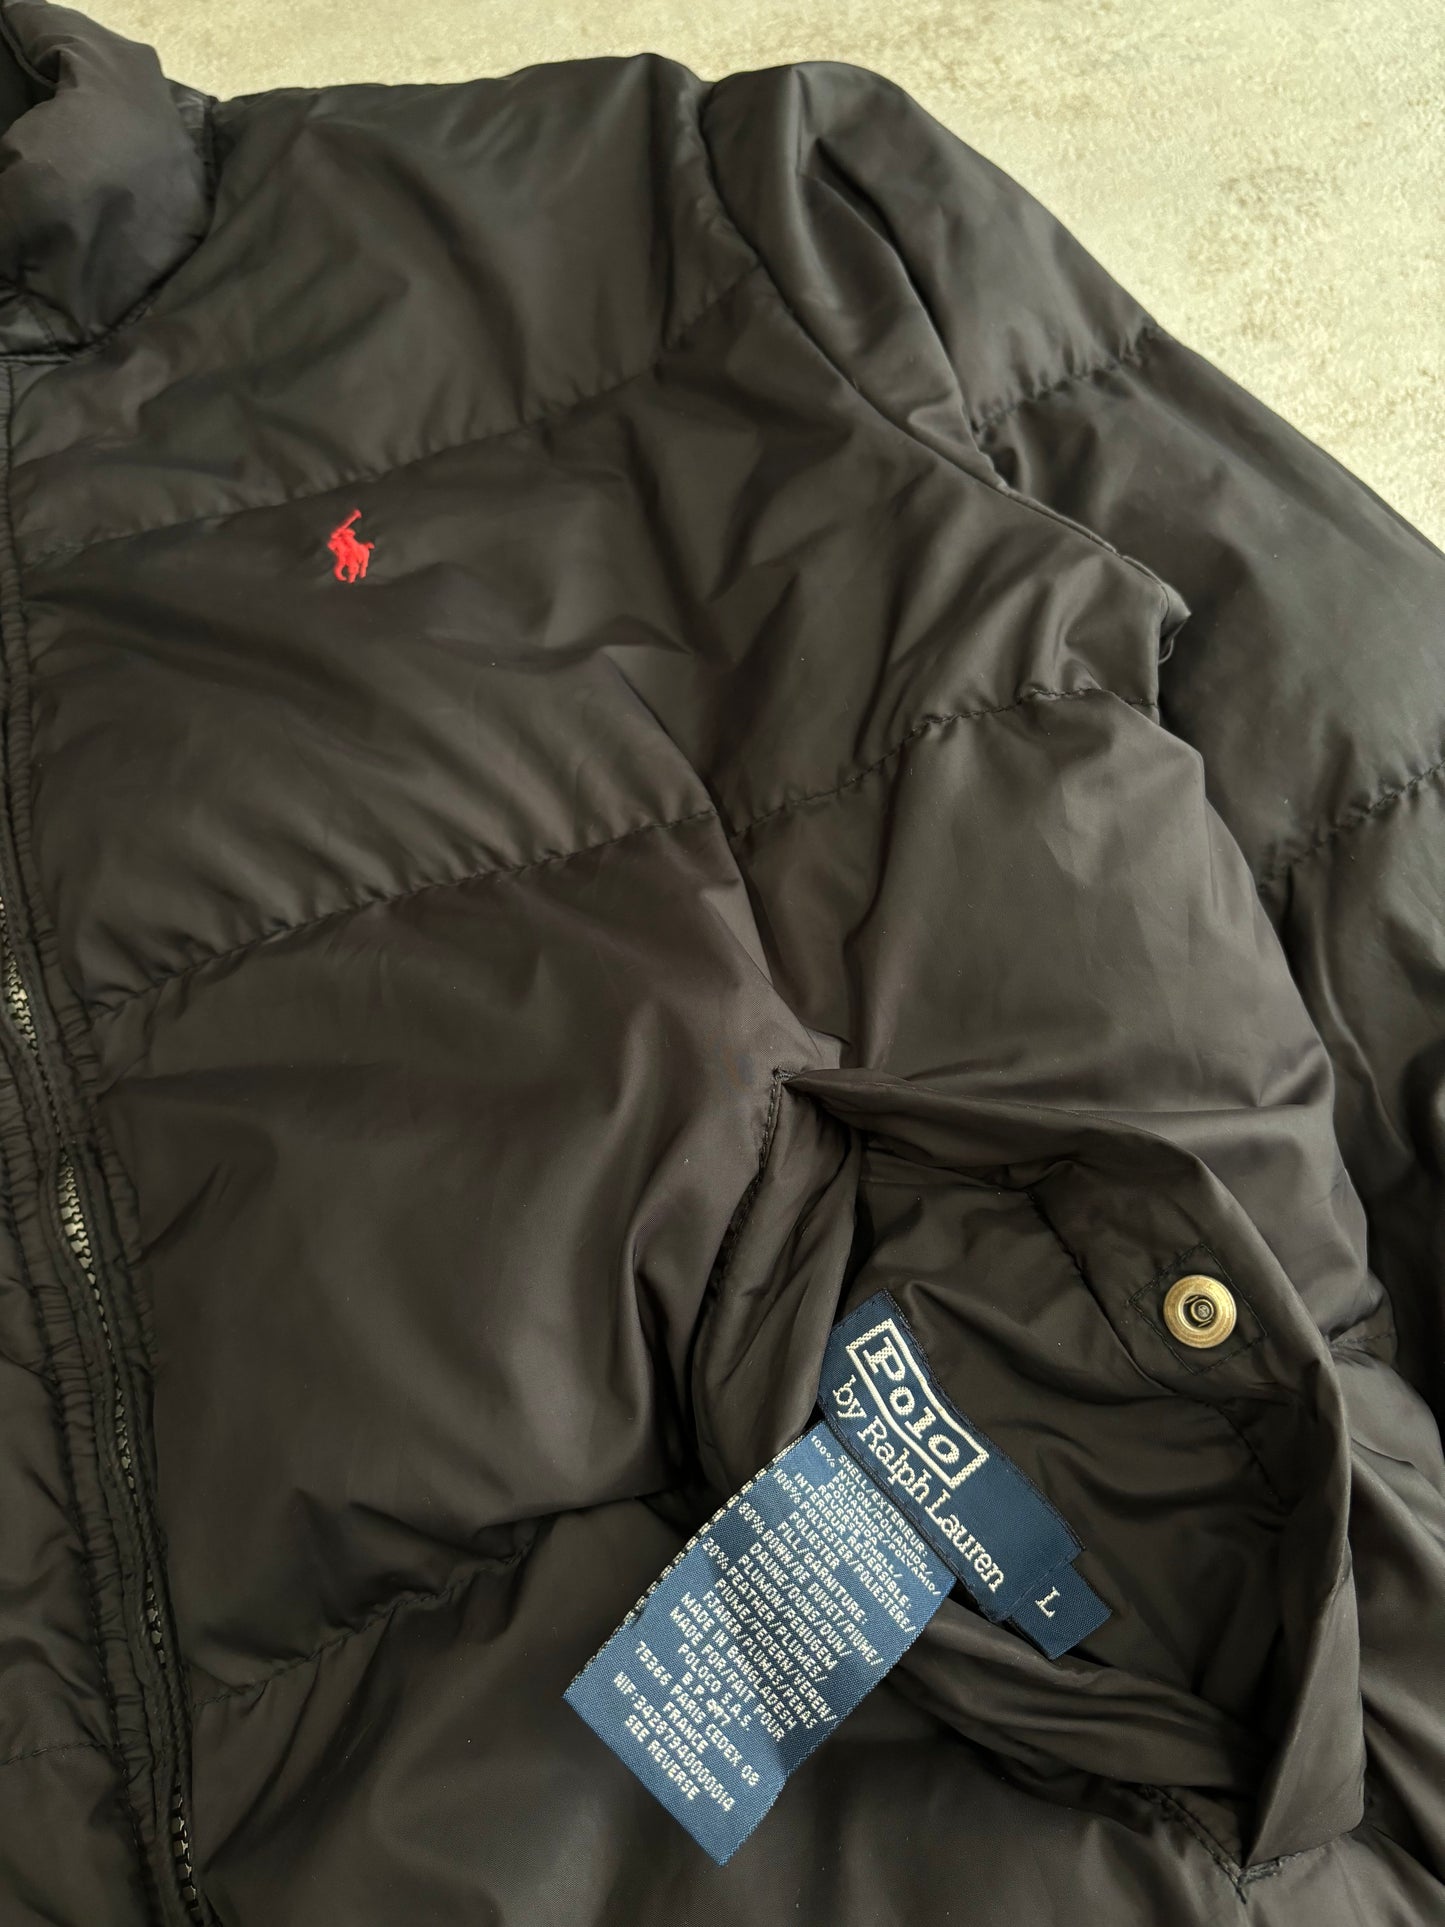 Polo Ralph Lauren 90s Vintage Reversible Down Jacket - XL